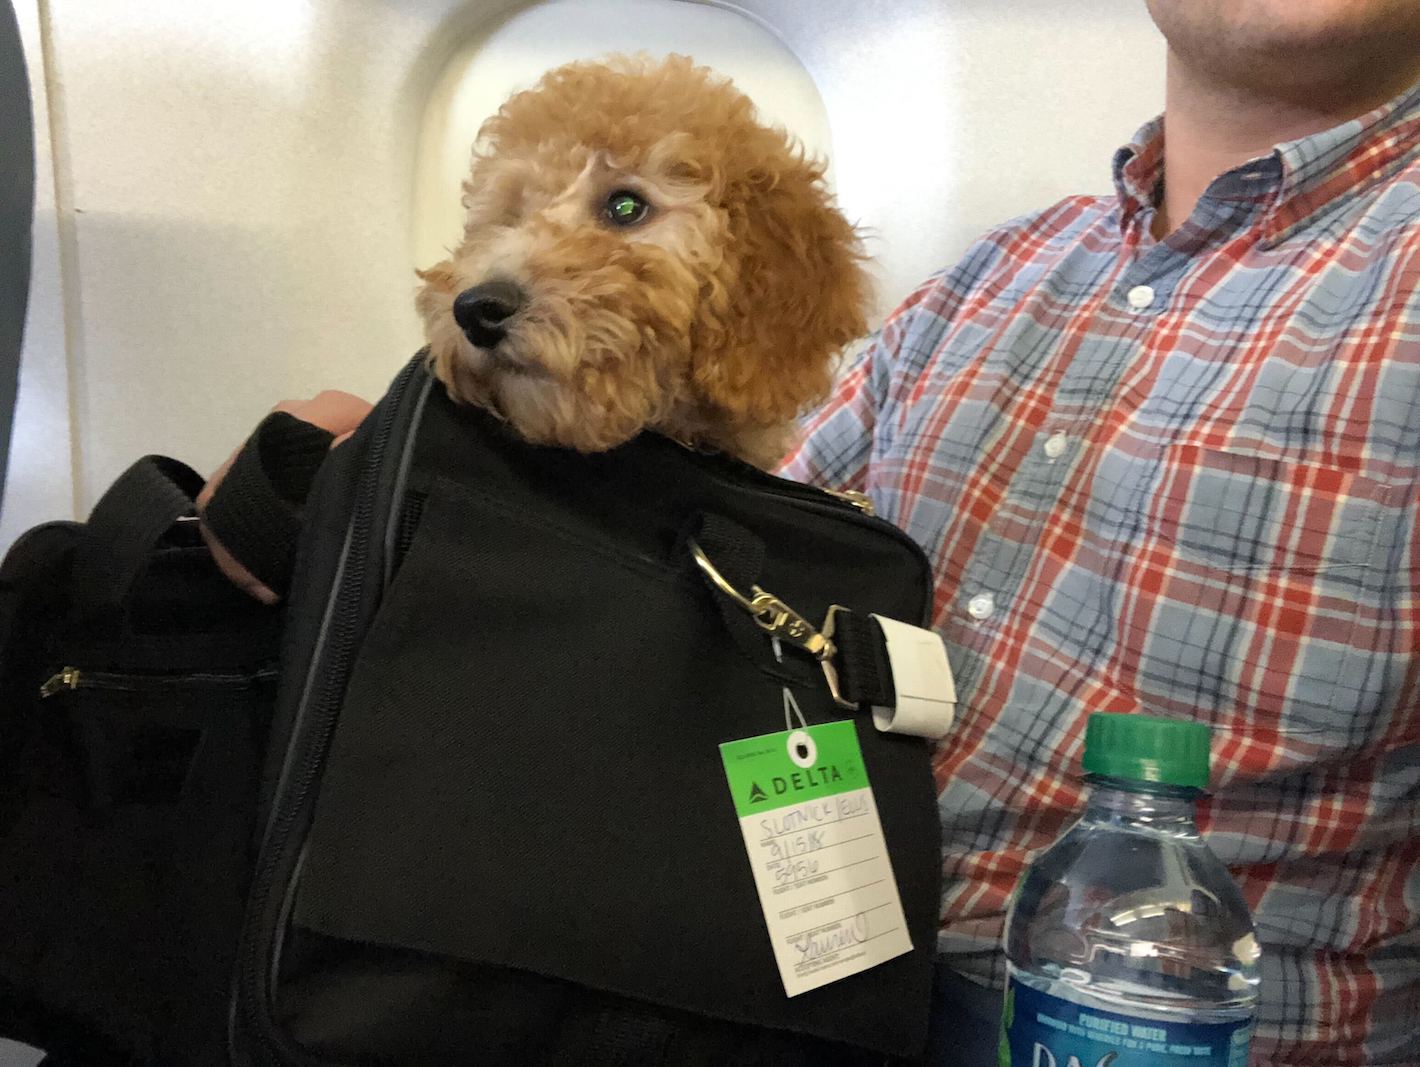 travel airplane dog